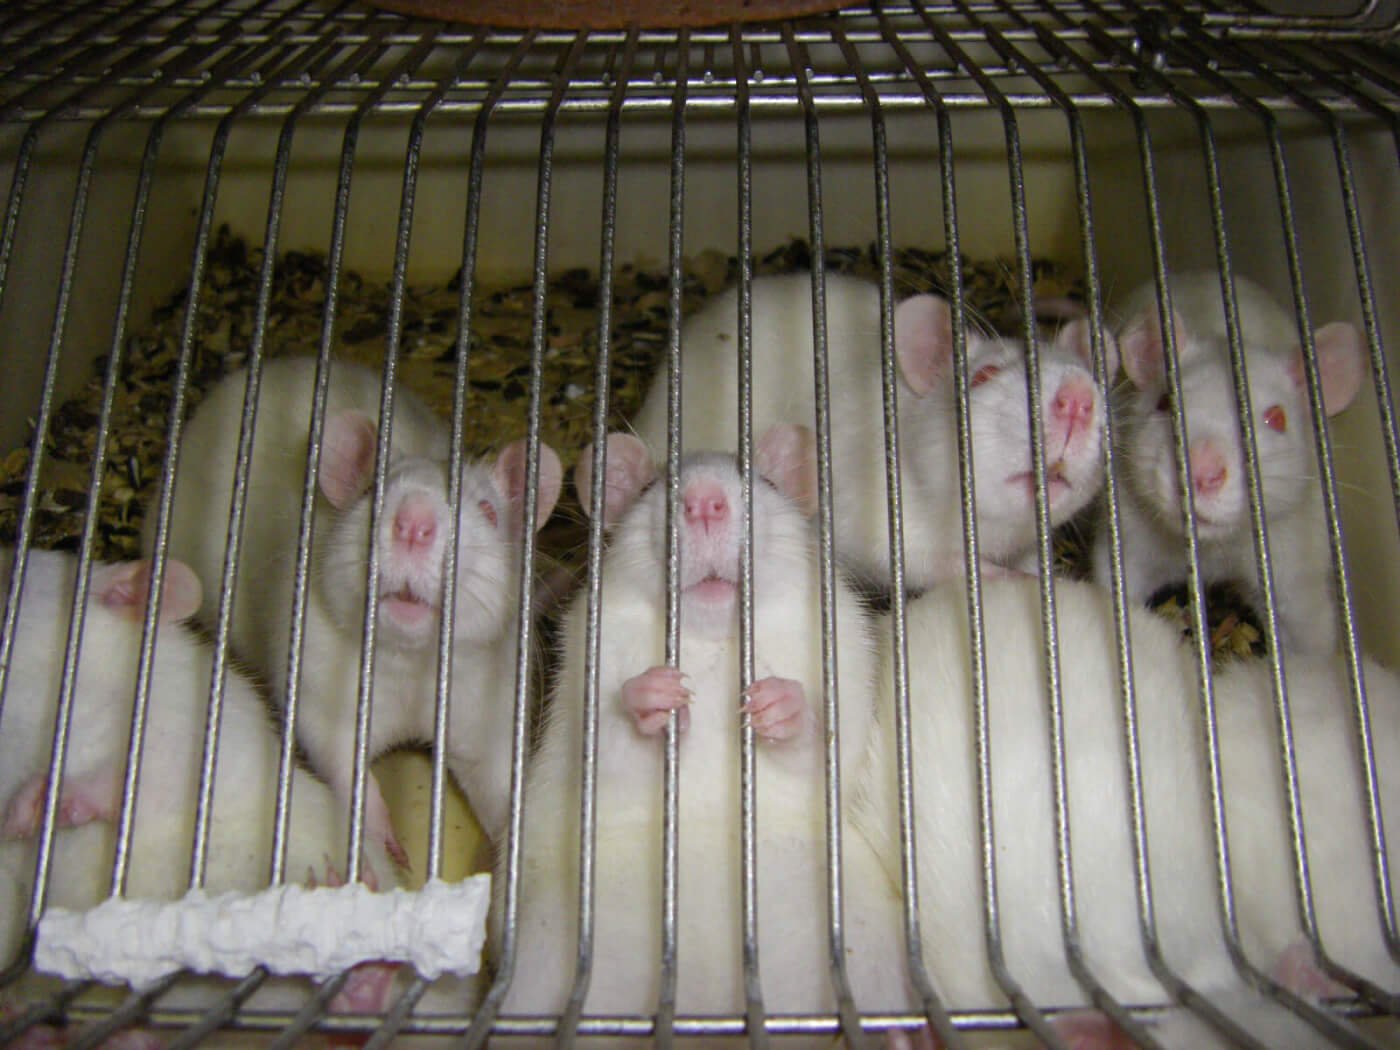 11 Animal Testing Statistics The Will Blow Your Mind | PETA